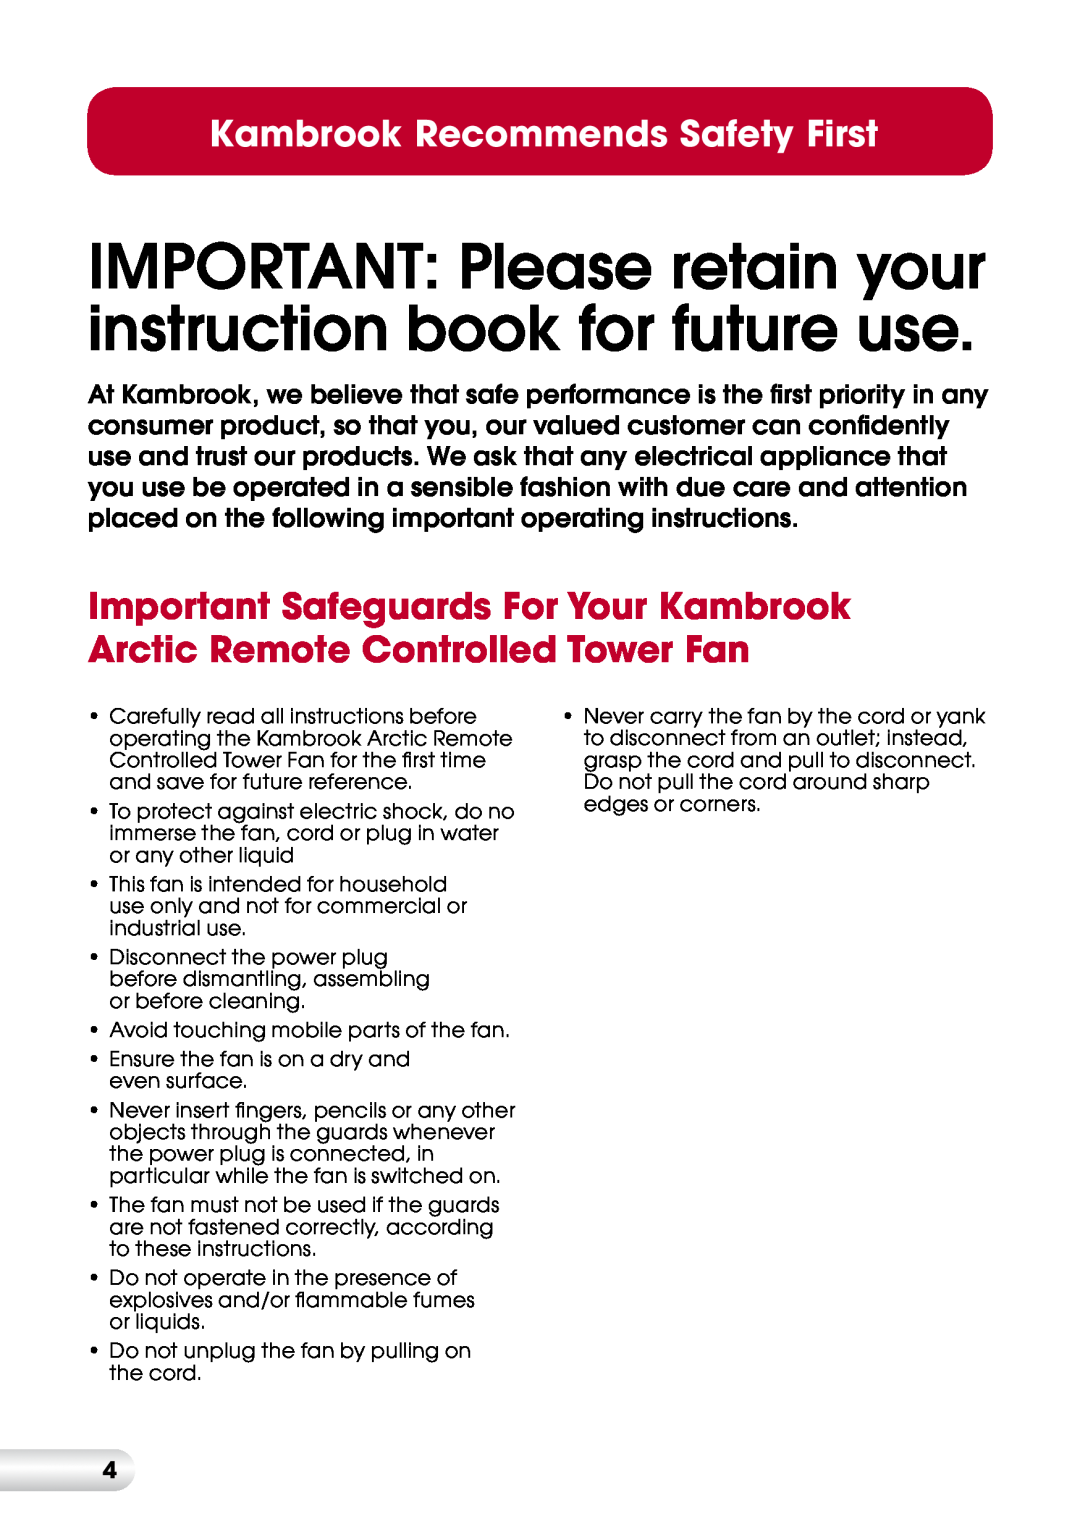 Kambrook KFA835 manual Kambrook Recommends Safety First 